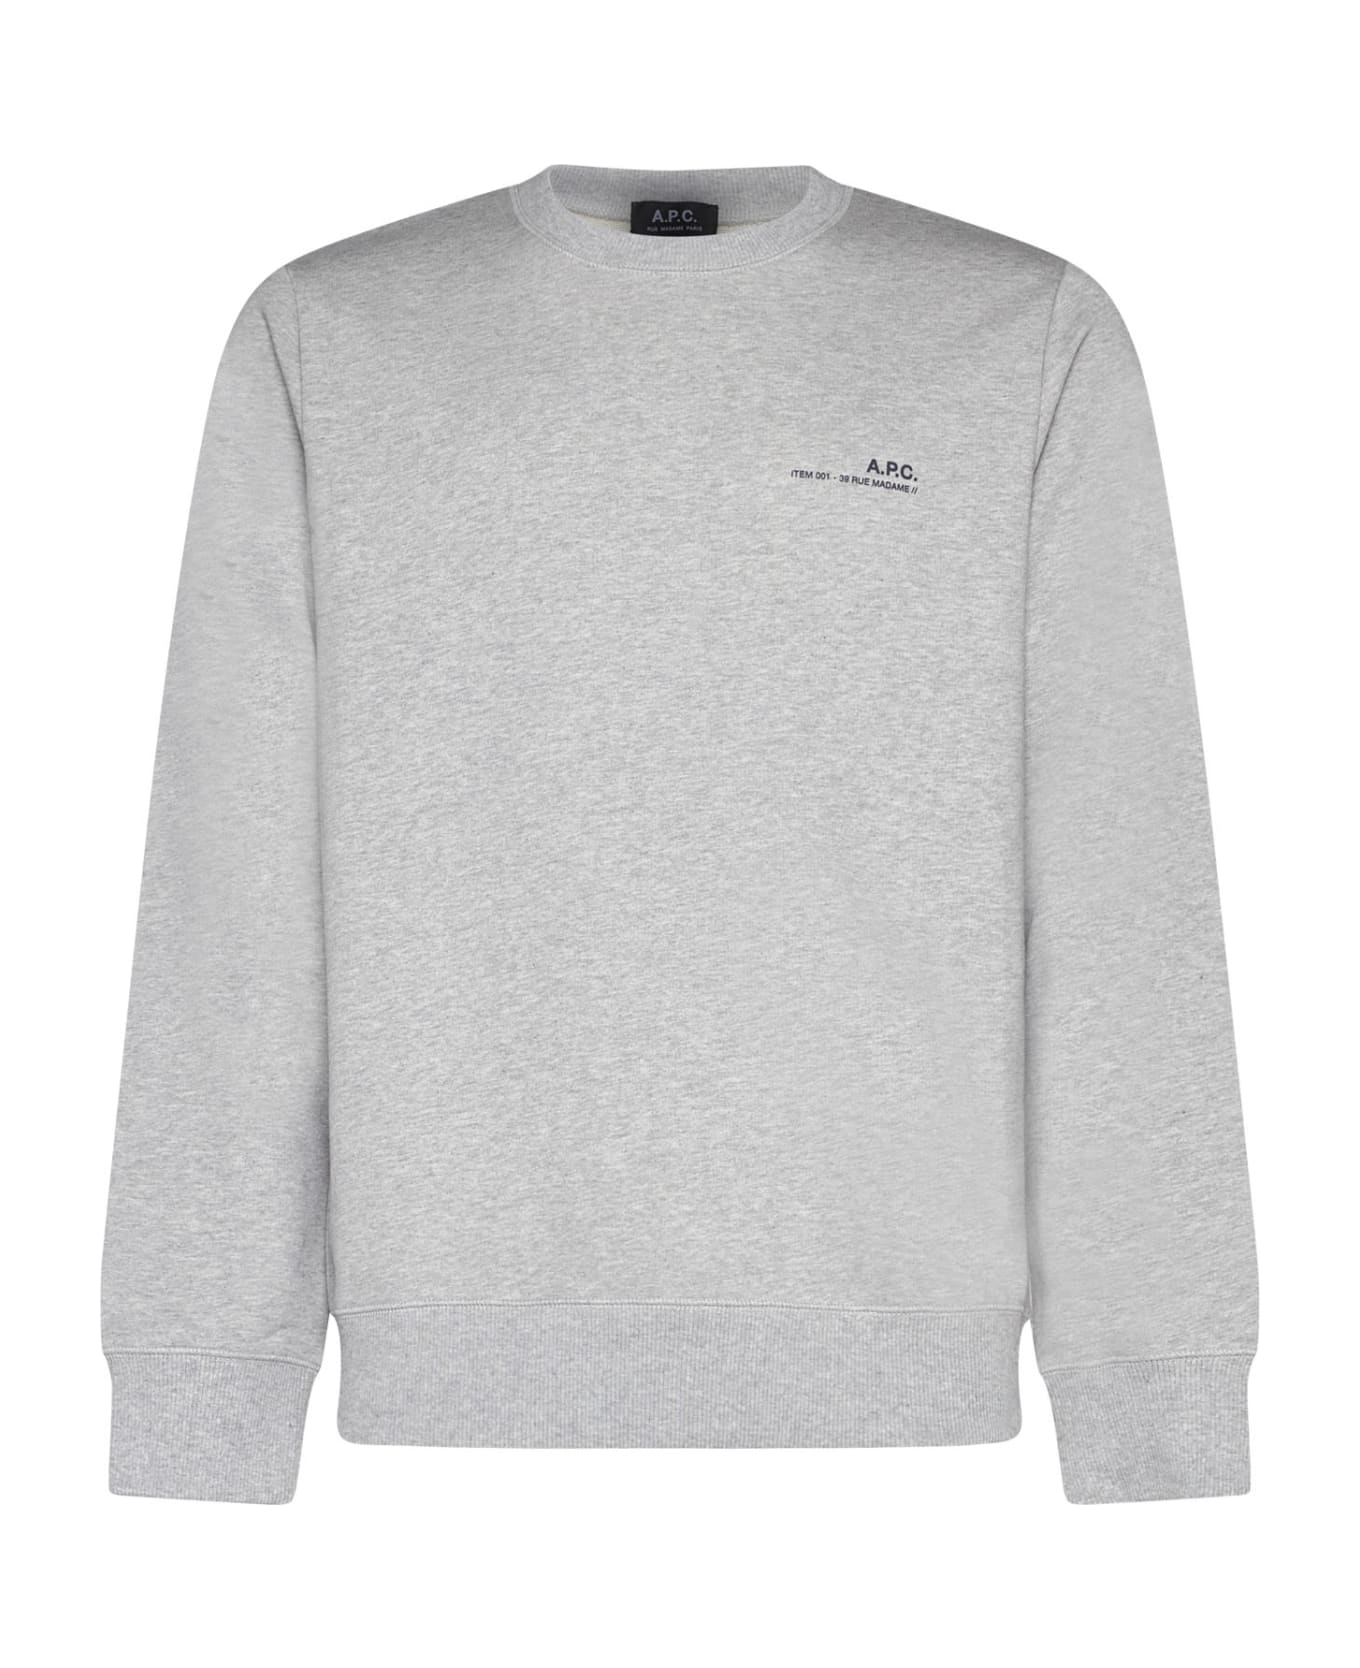 A.P.C. Sweatshirt With Logo - Heathered light grey